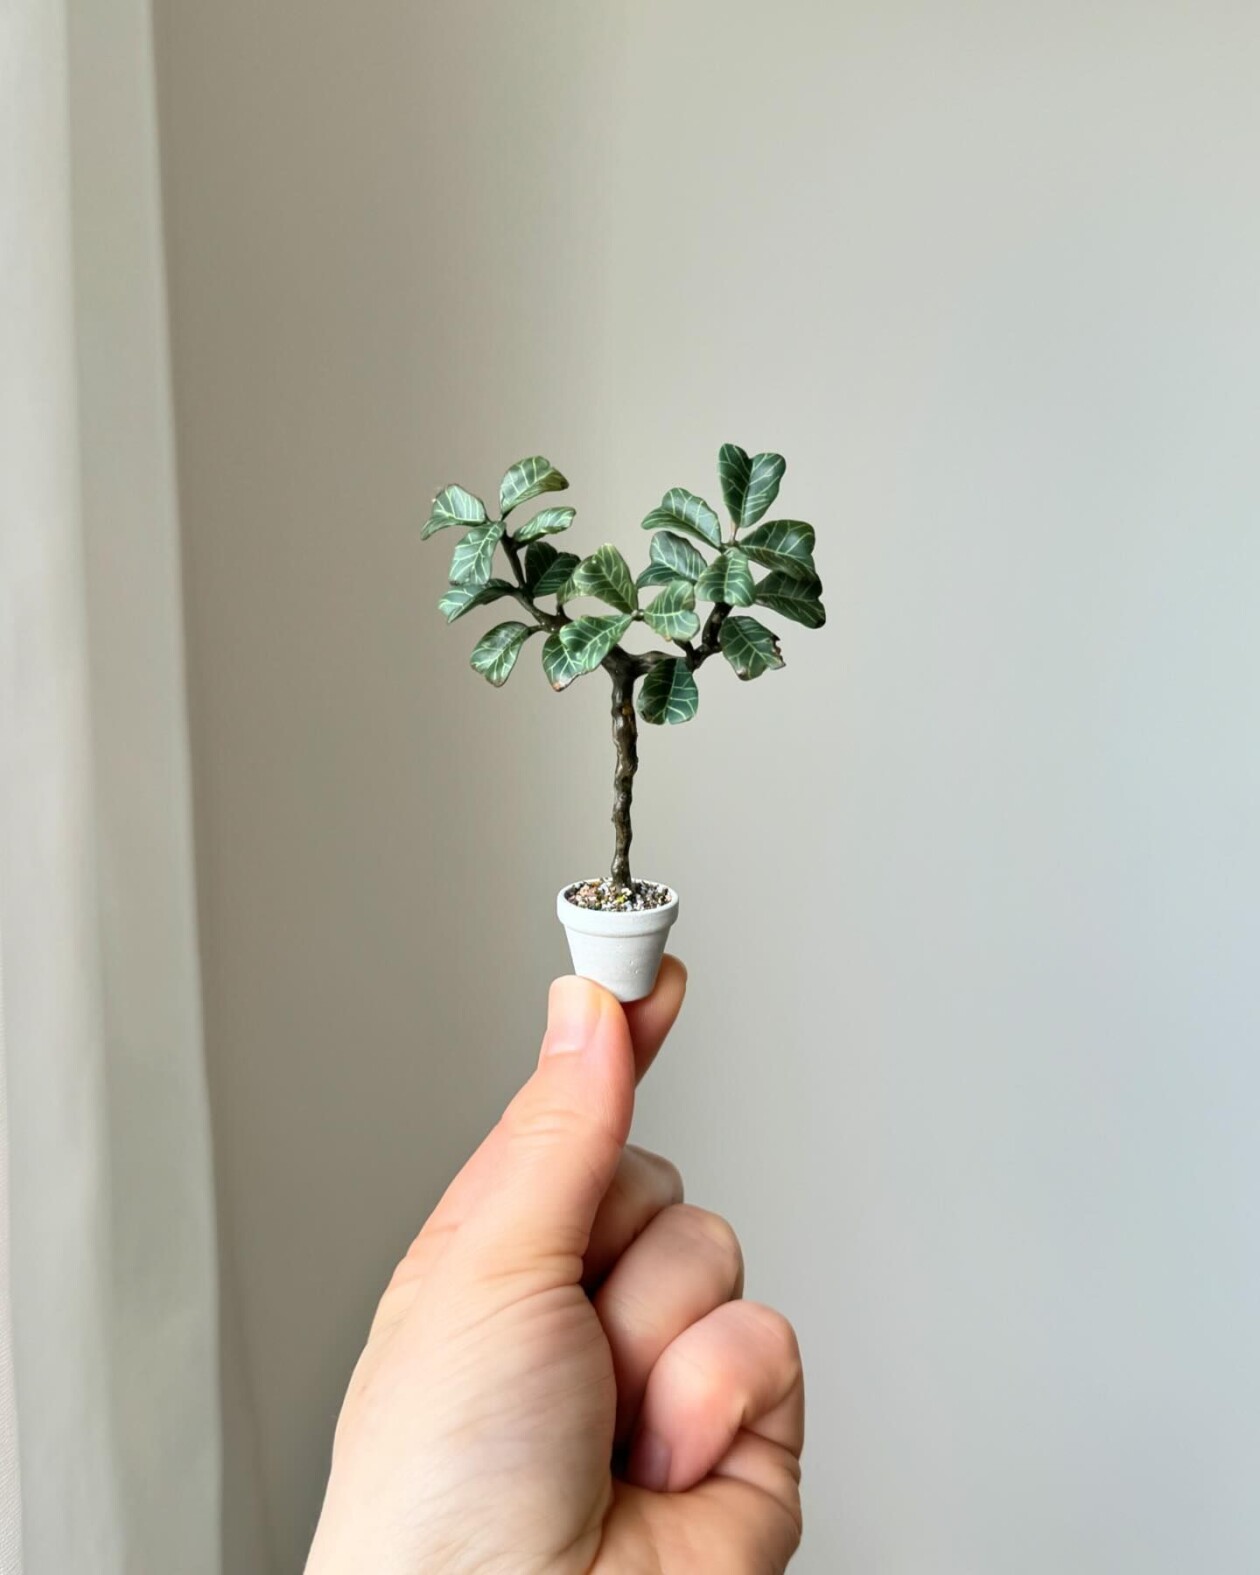 Handmade Miniature Polymer Clay Plants By Astrid Wilk (27)